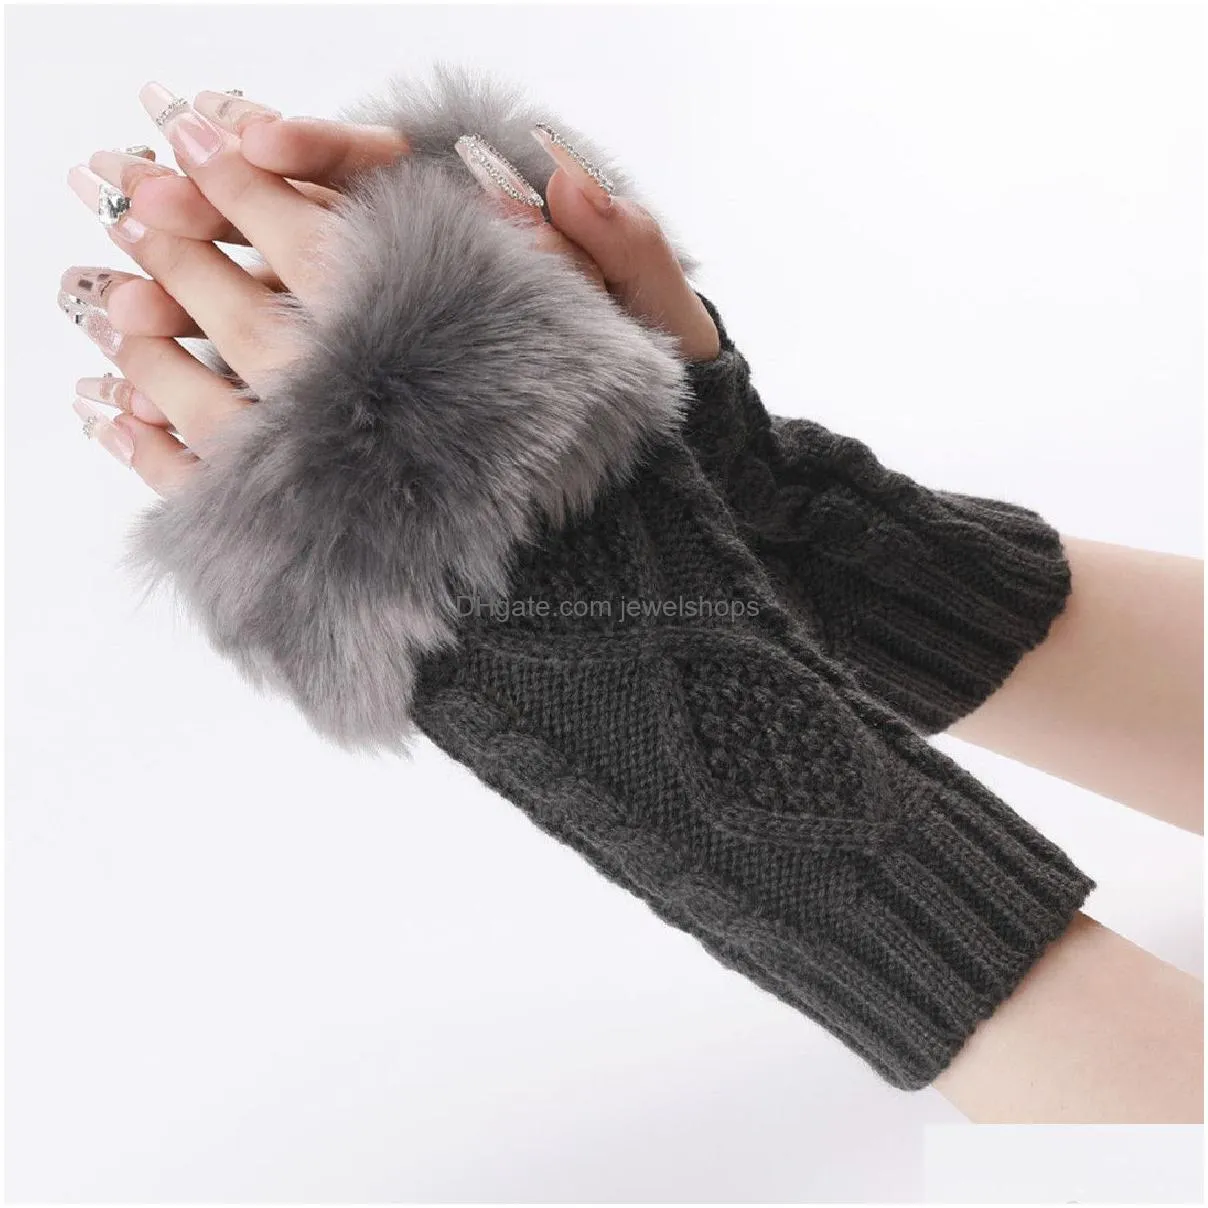 knitting short gloves winter warm crochet arm fingerless arm cover mittens cuff for women